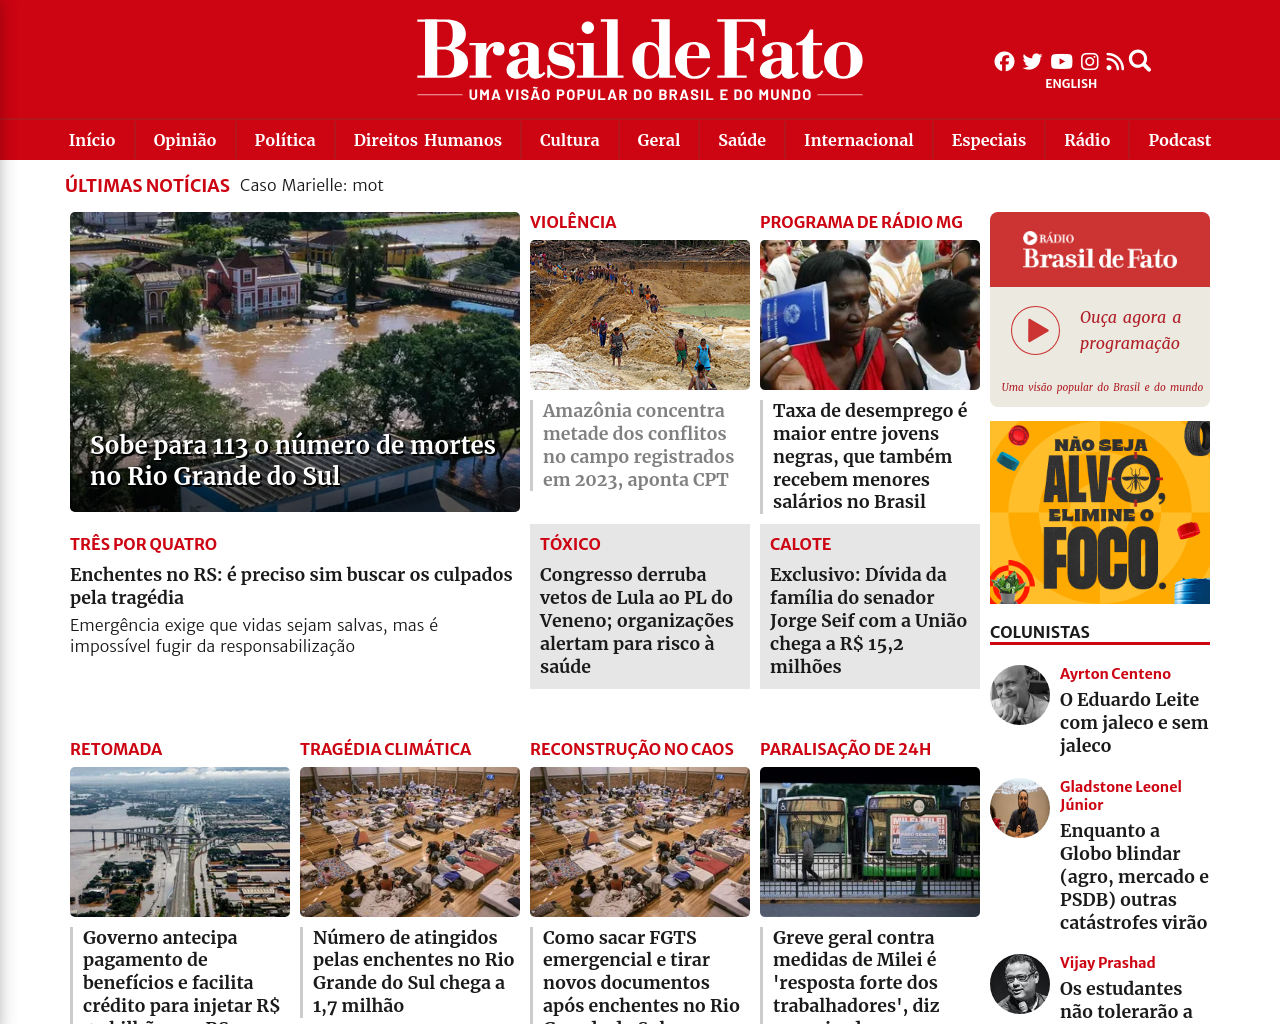 brasildefato.com.br